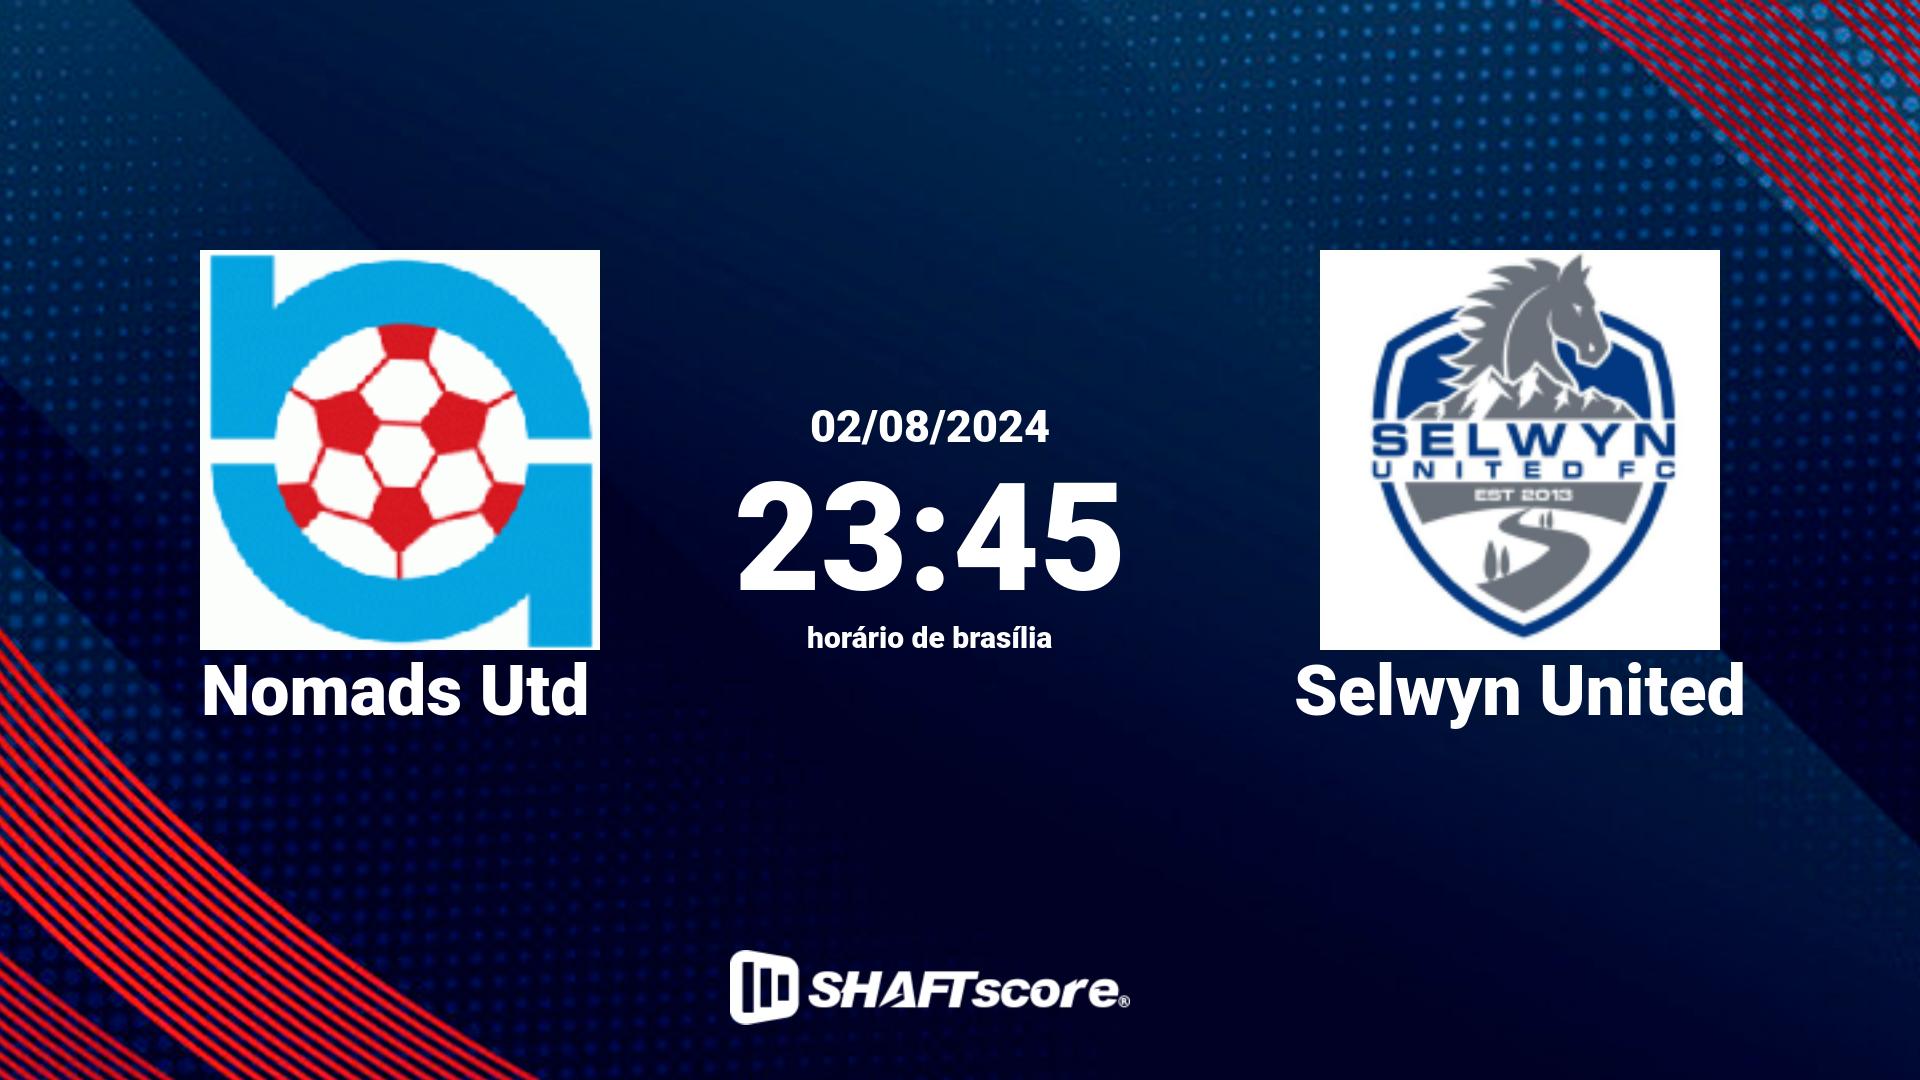 Estatísticas do jogo Nomads Utd vs Selwyn United 02.08 23:45